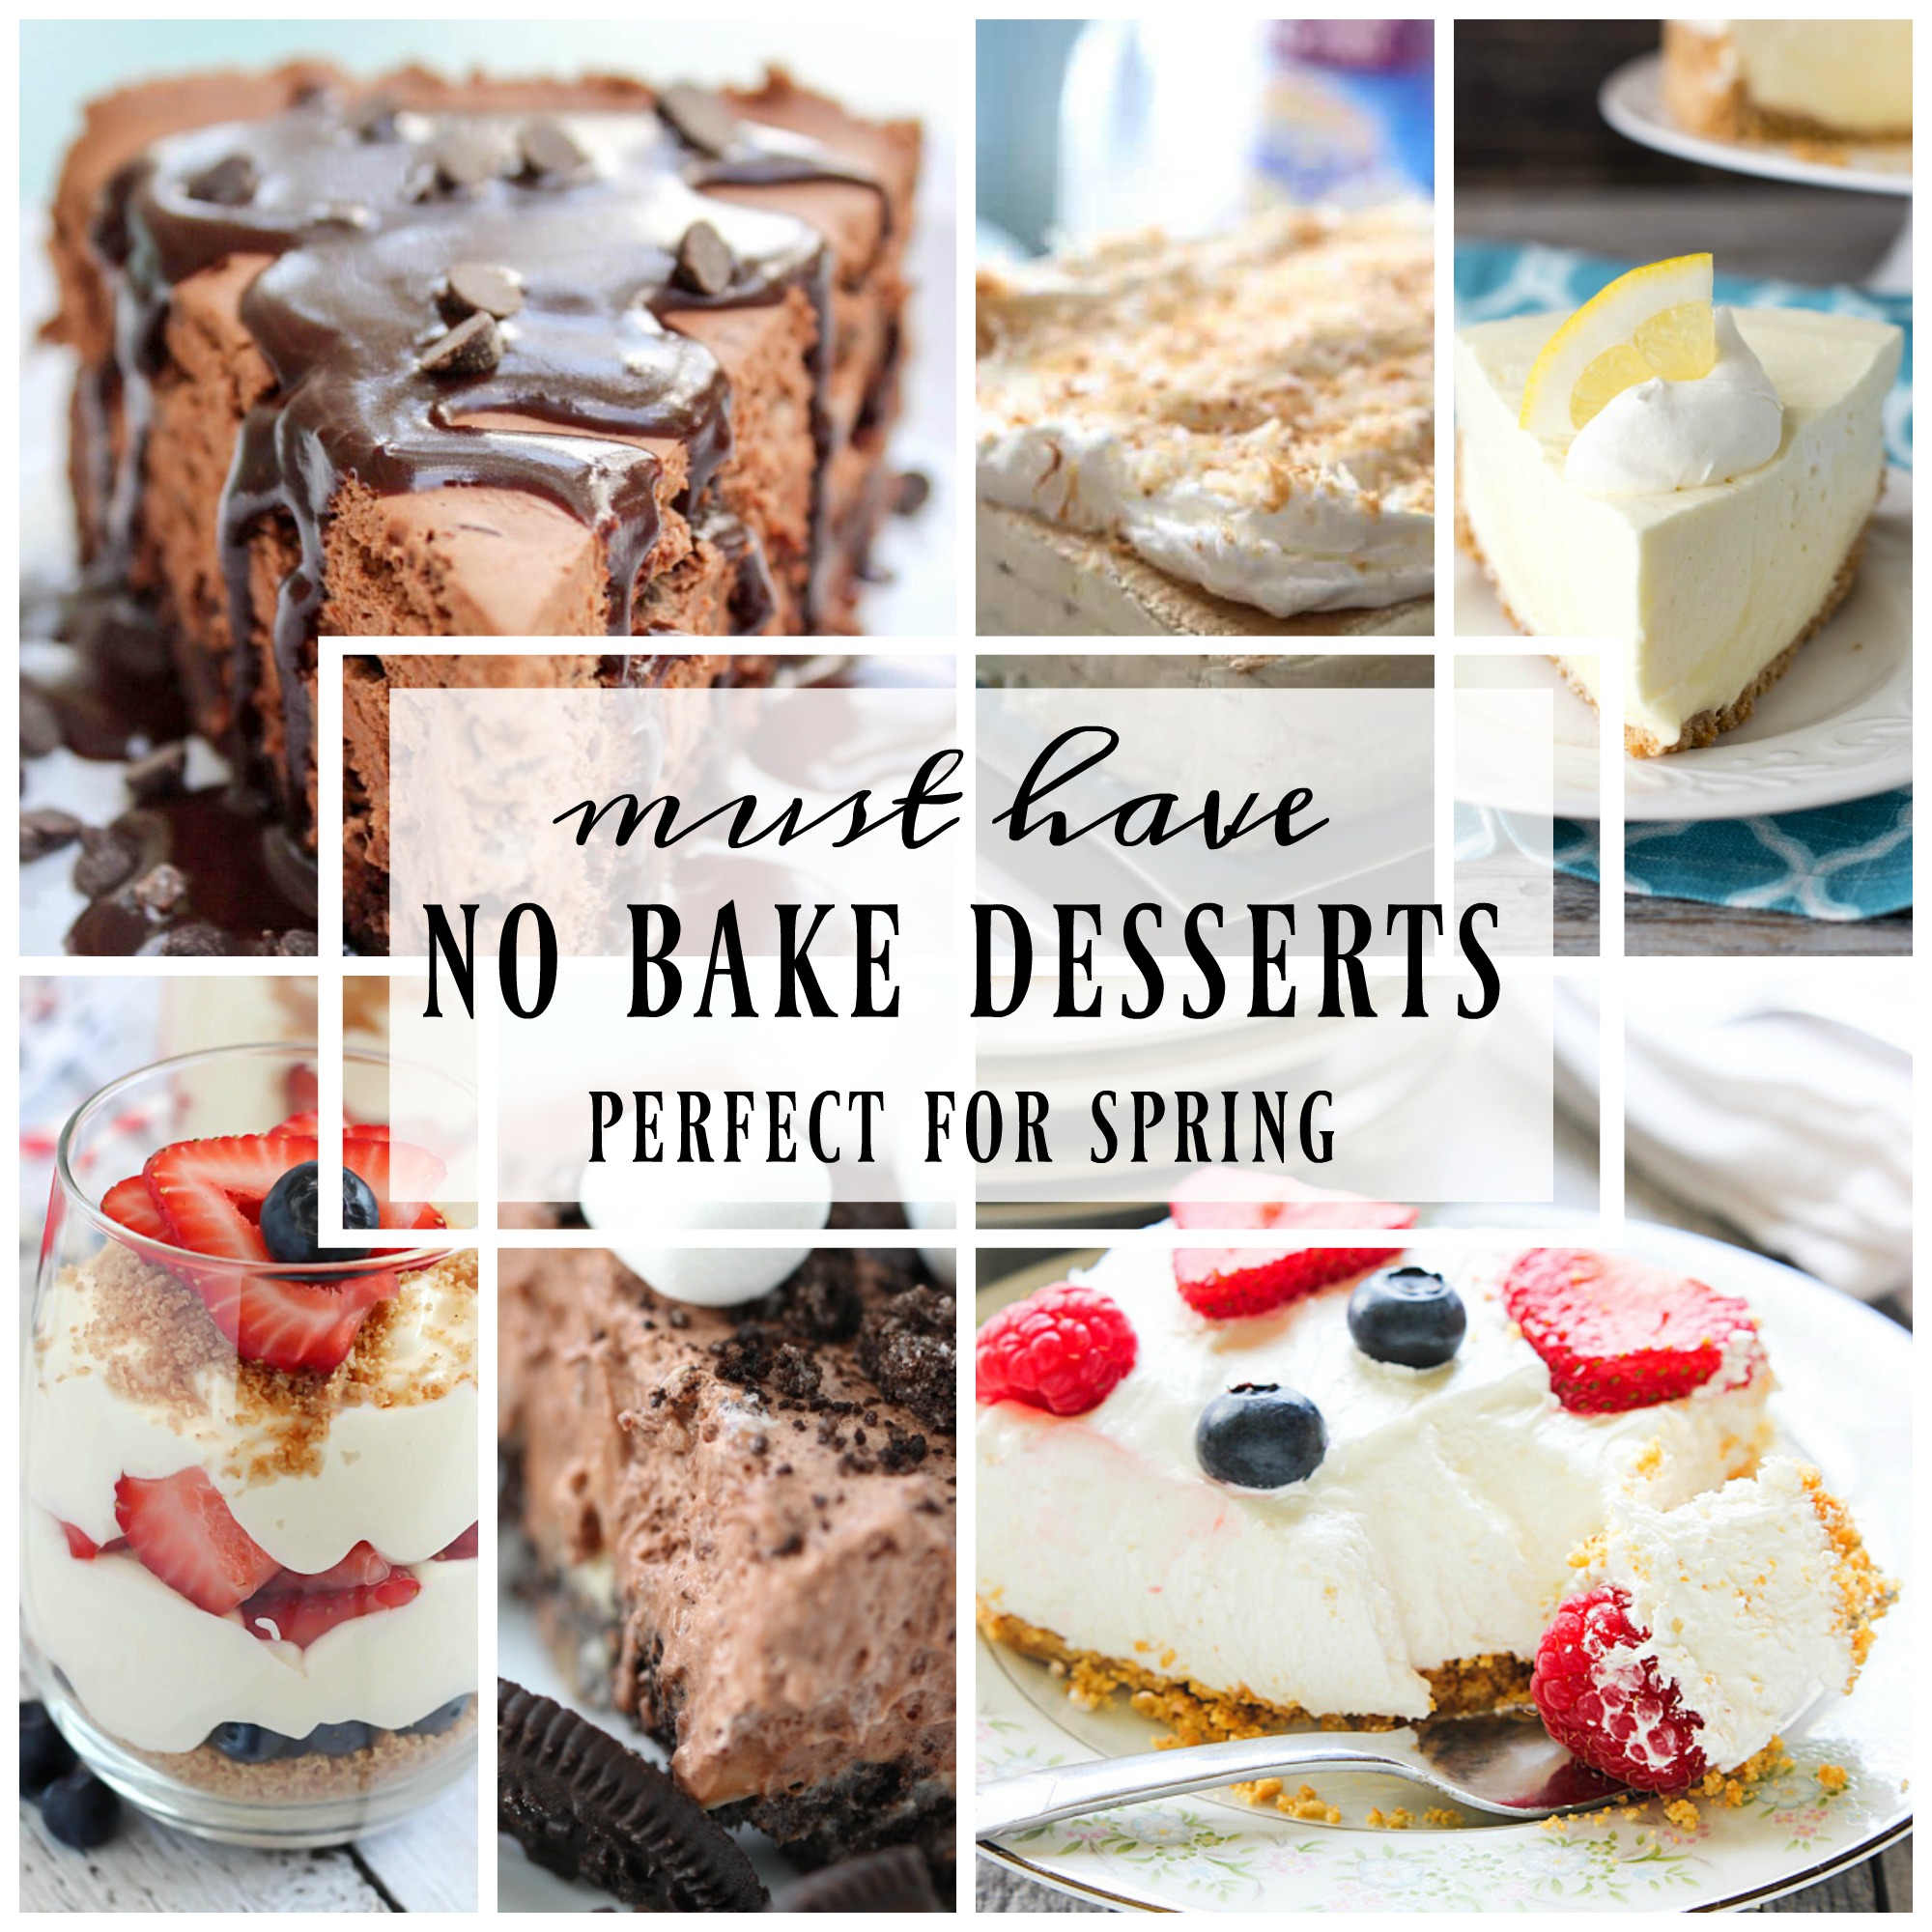 No bake desserts